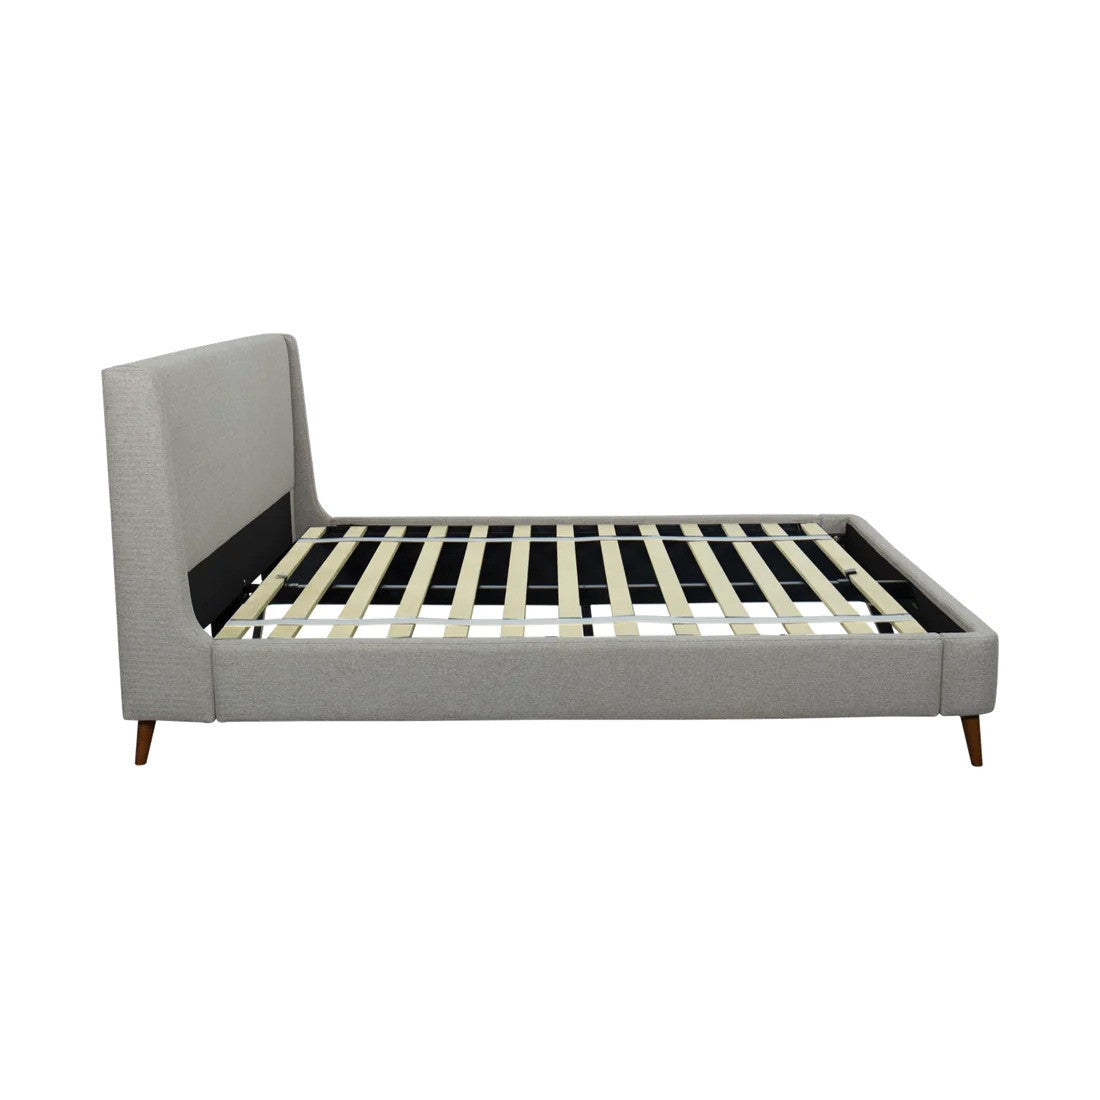 Brooklyn Upholstered Bed Frame